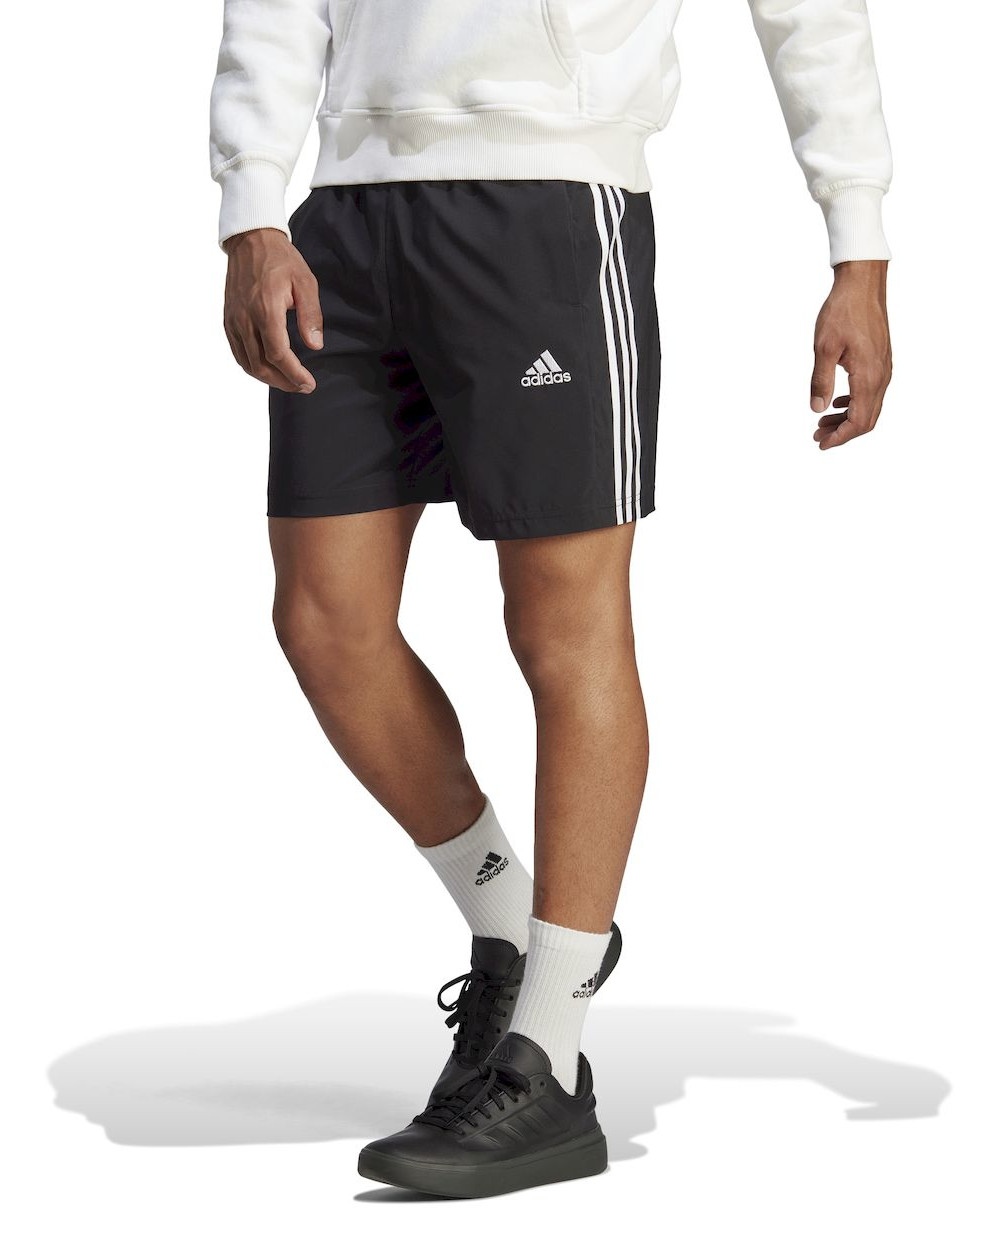  Pantaloncini Shorts UOMO Adidas 3 Stripes Chelsea Nero Bianco con tasche